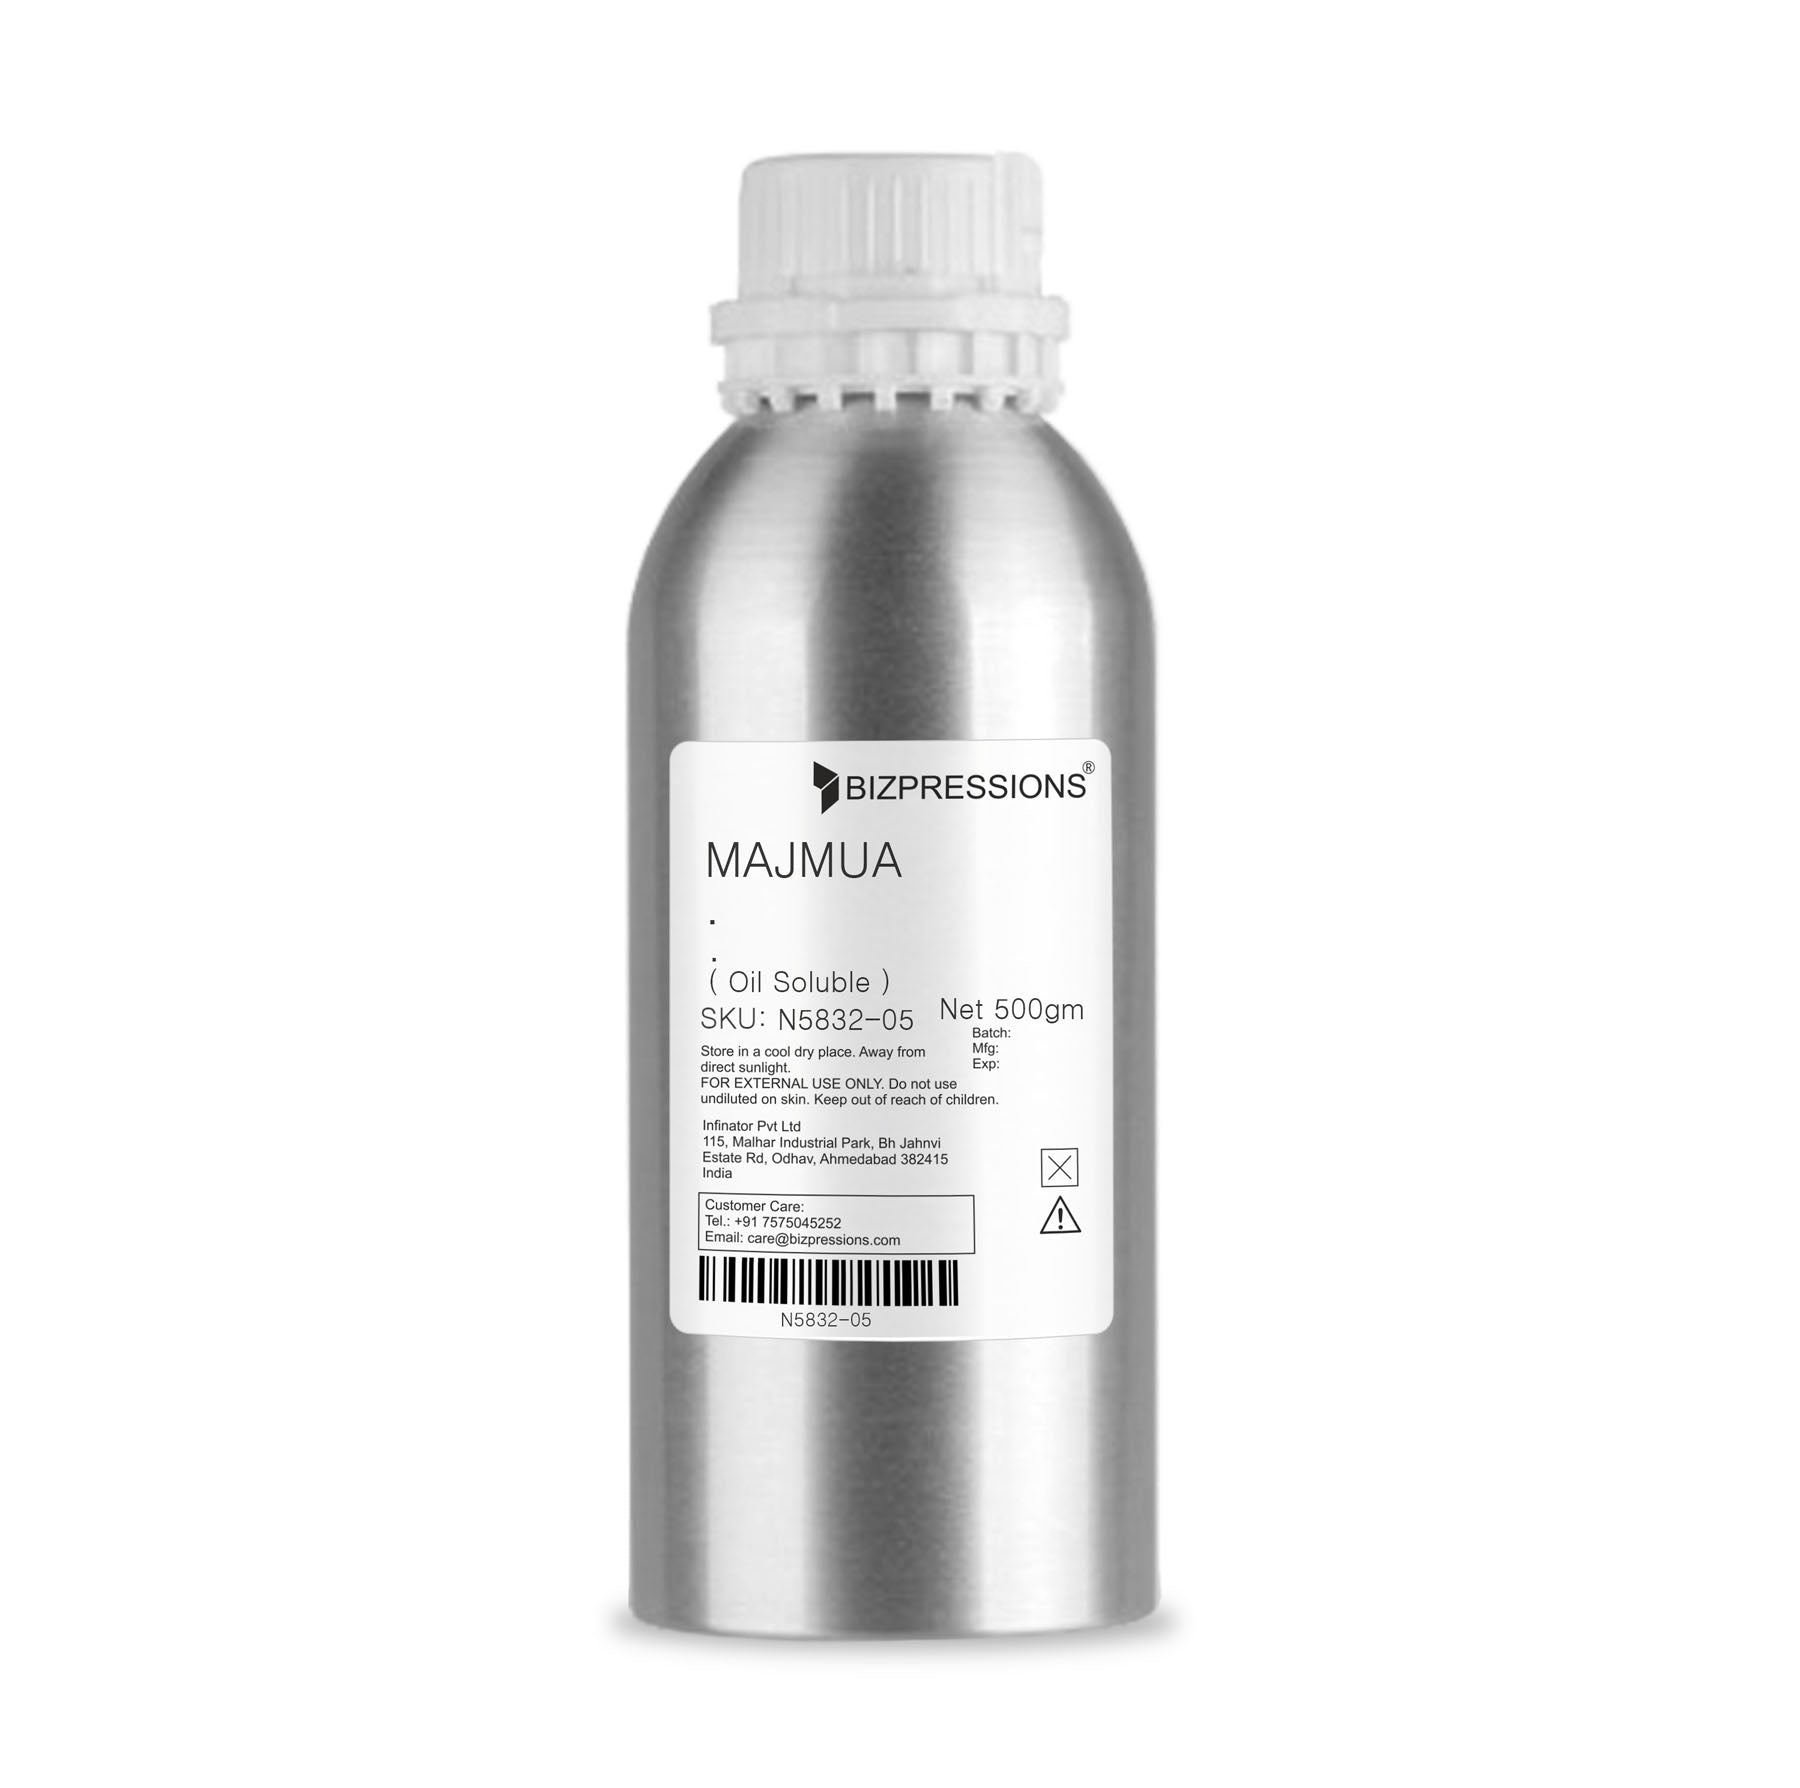 MAJMUA - Fragrance ( Oil Soluble ) - 500 gm